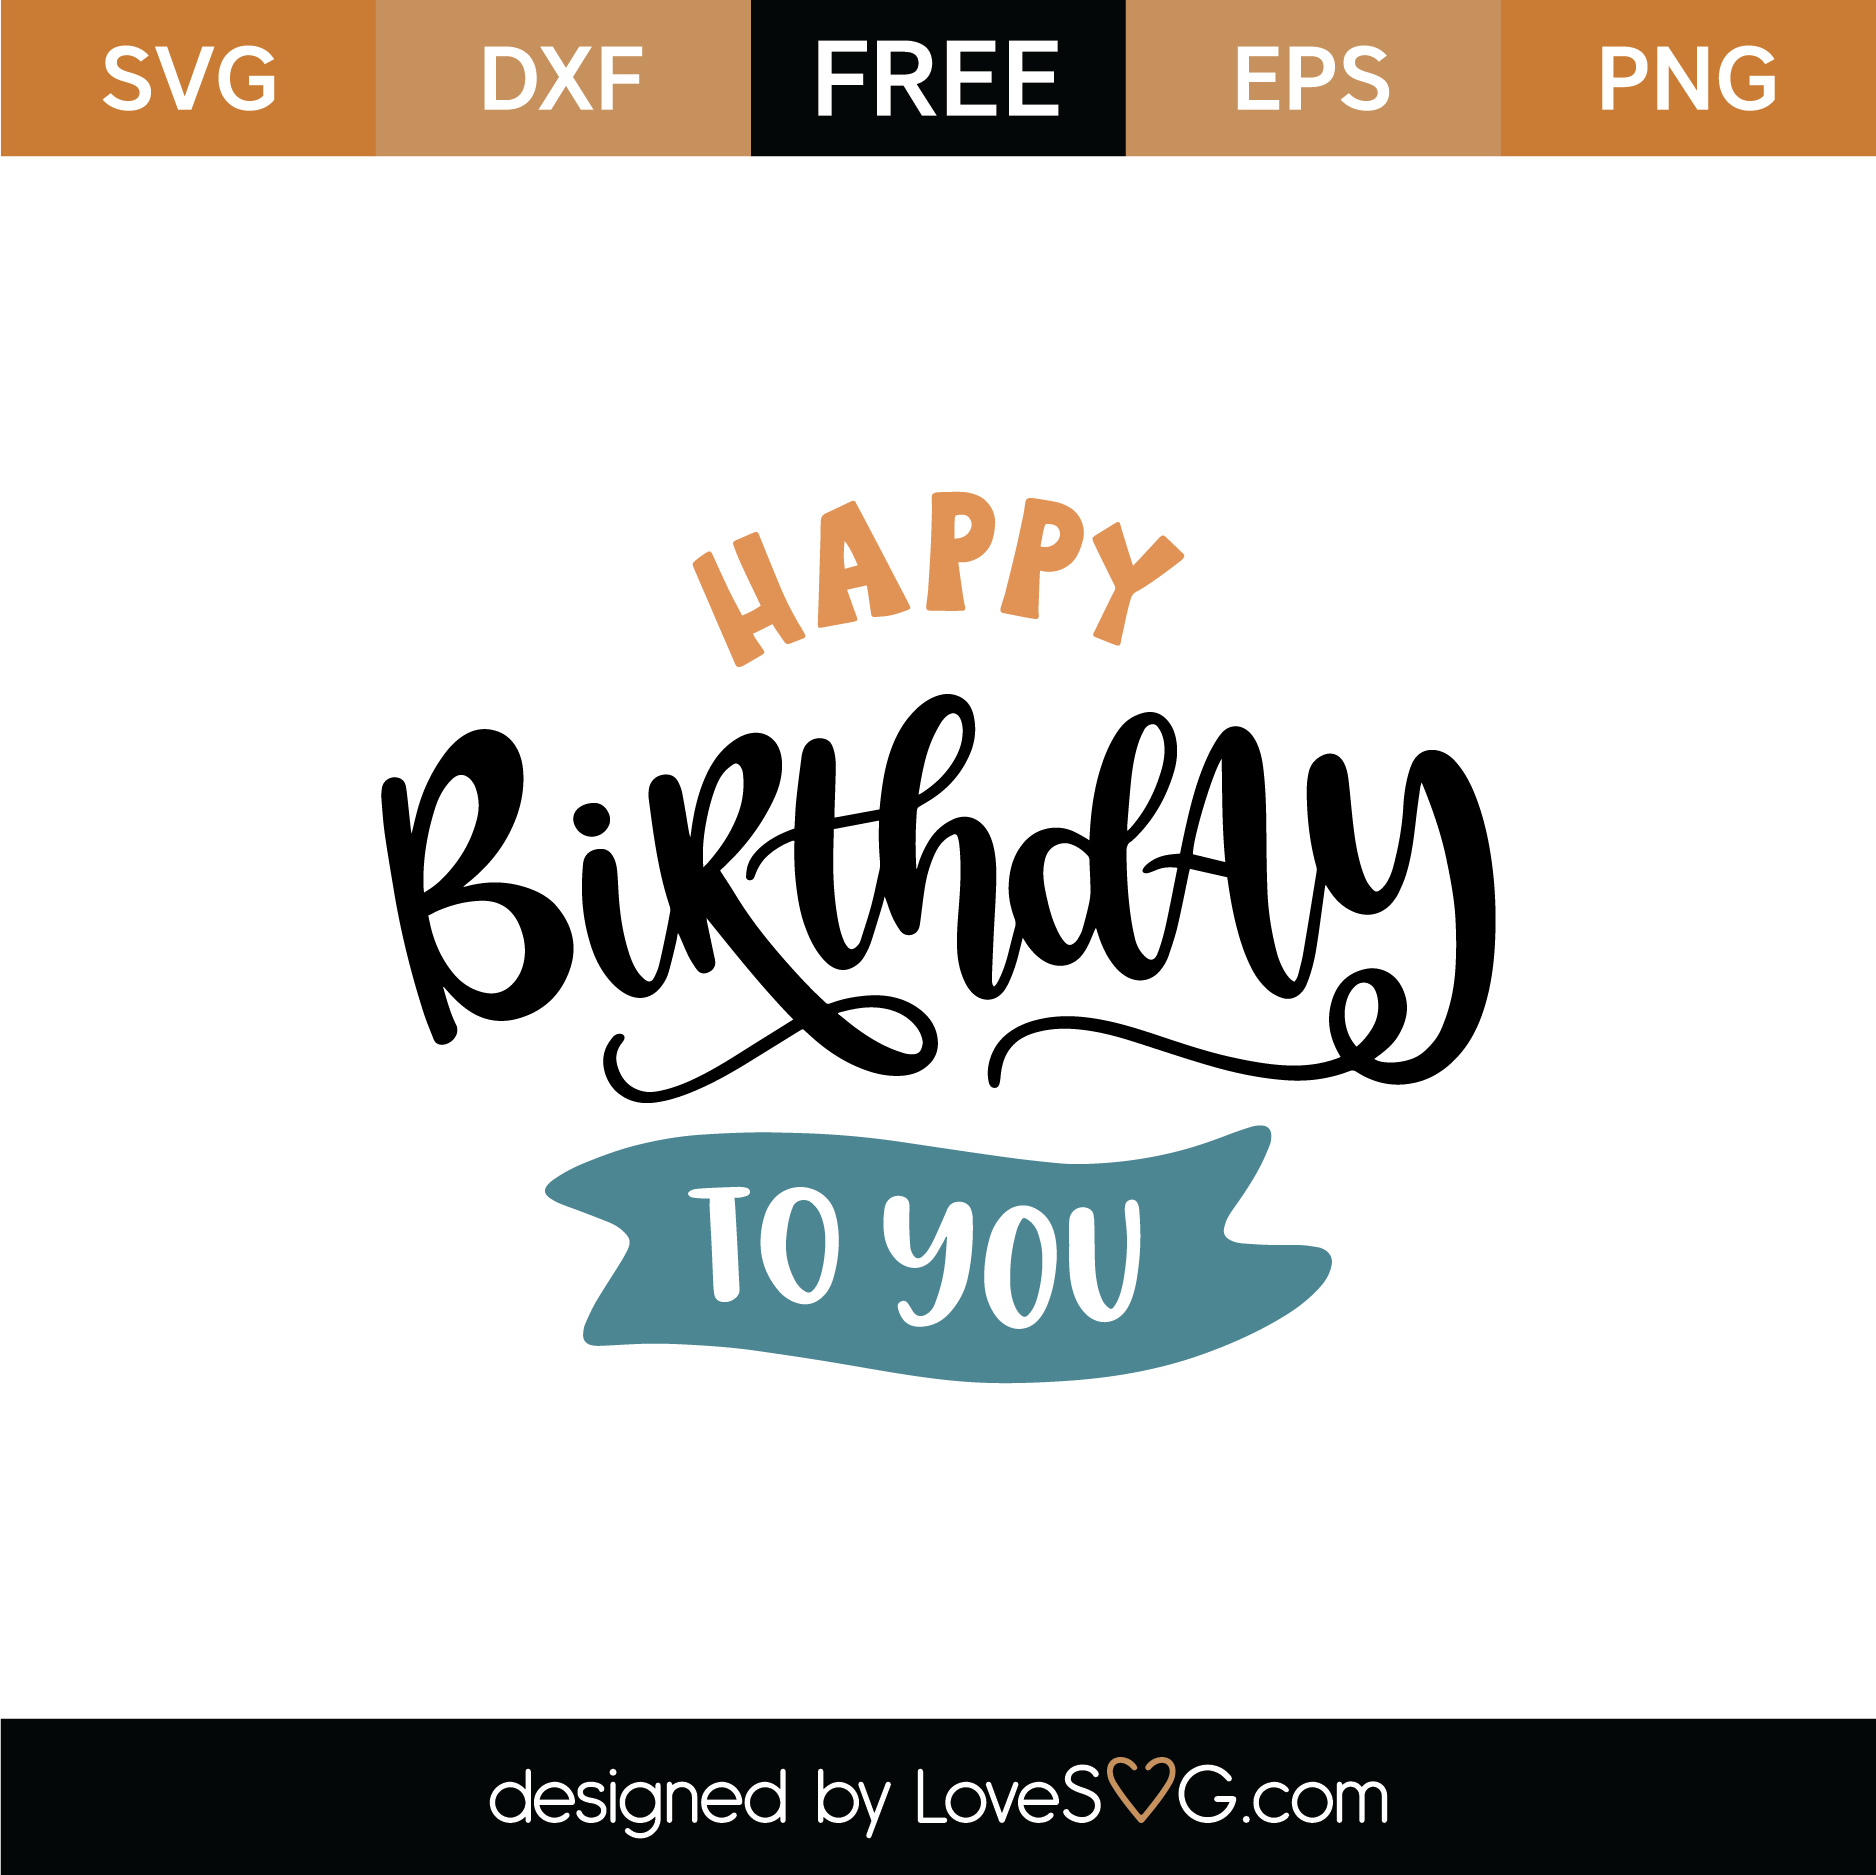 Download Free Happy Birthday To You SVG Cut File | Lovesvg.com